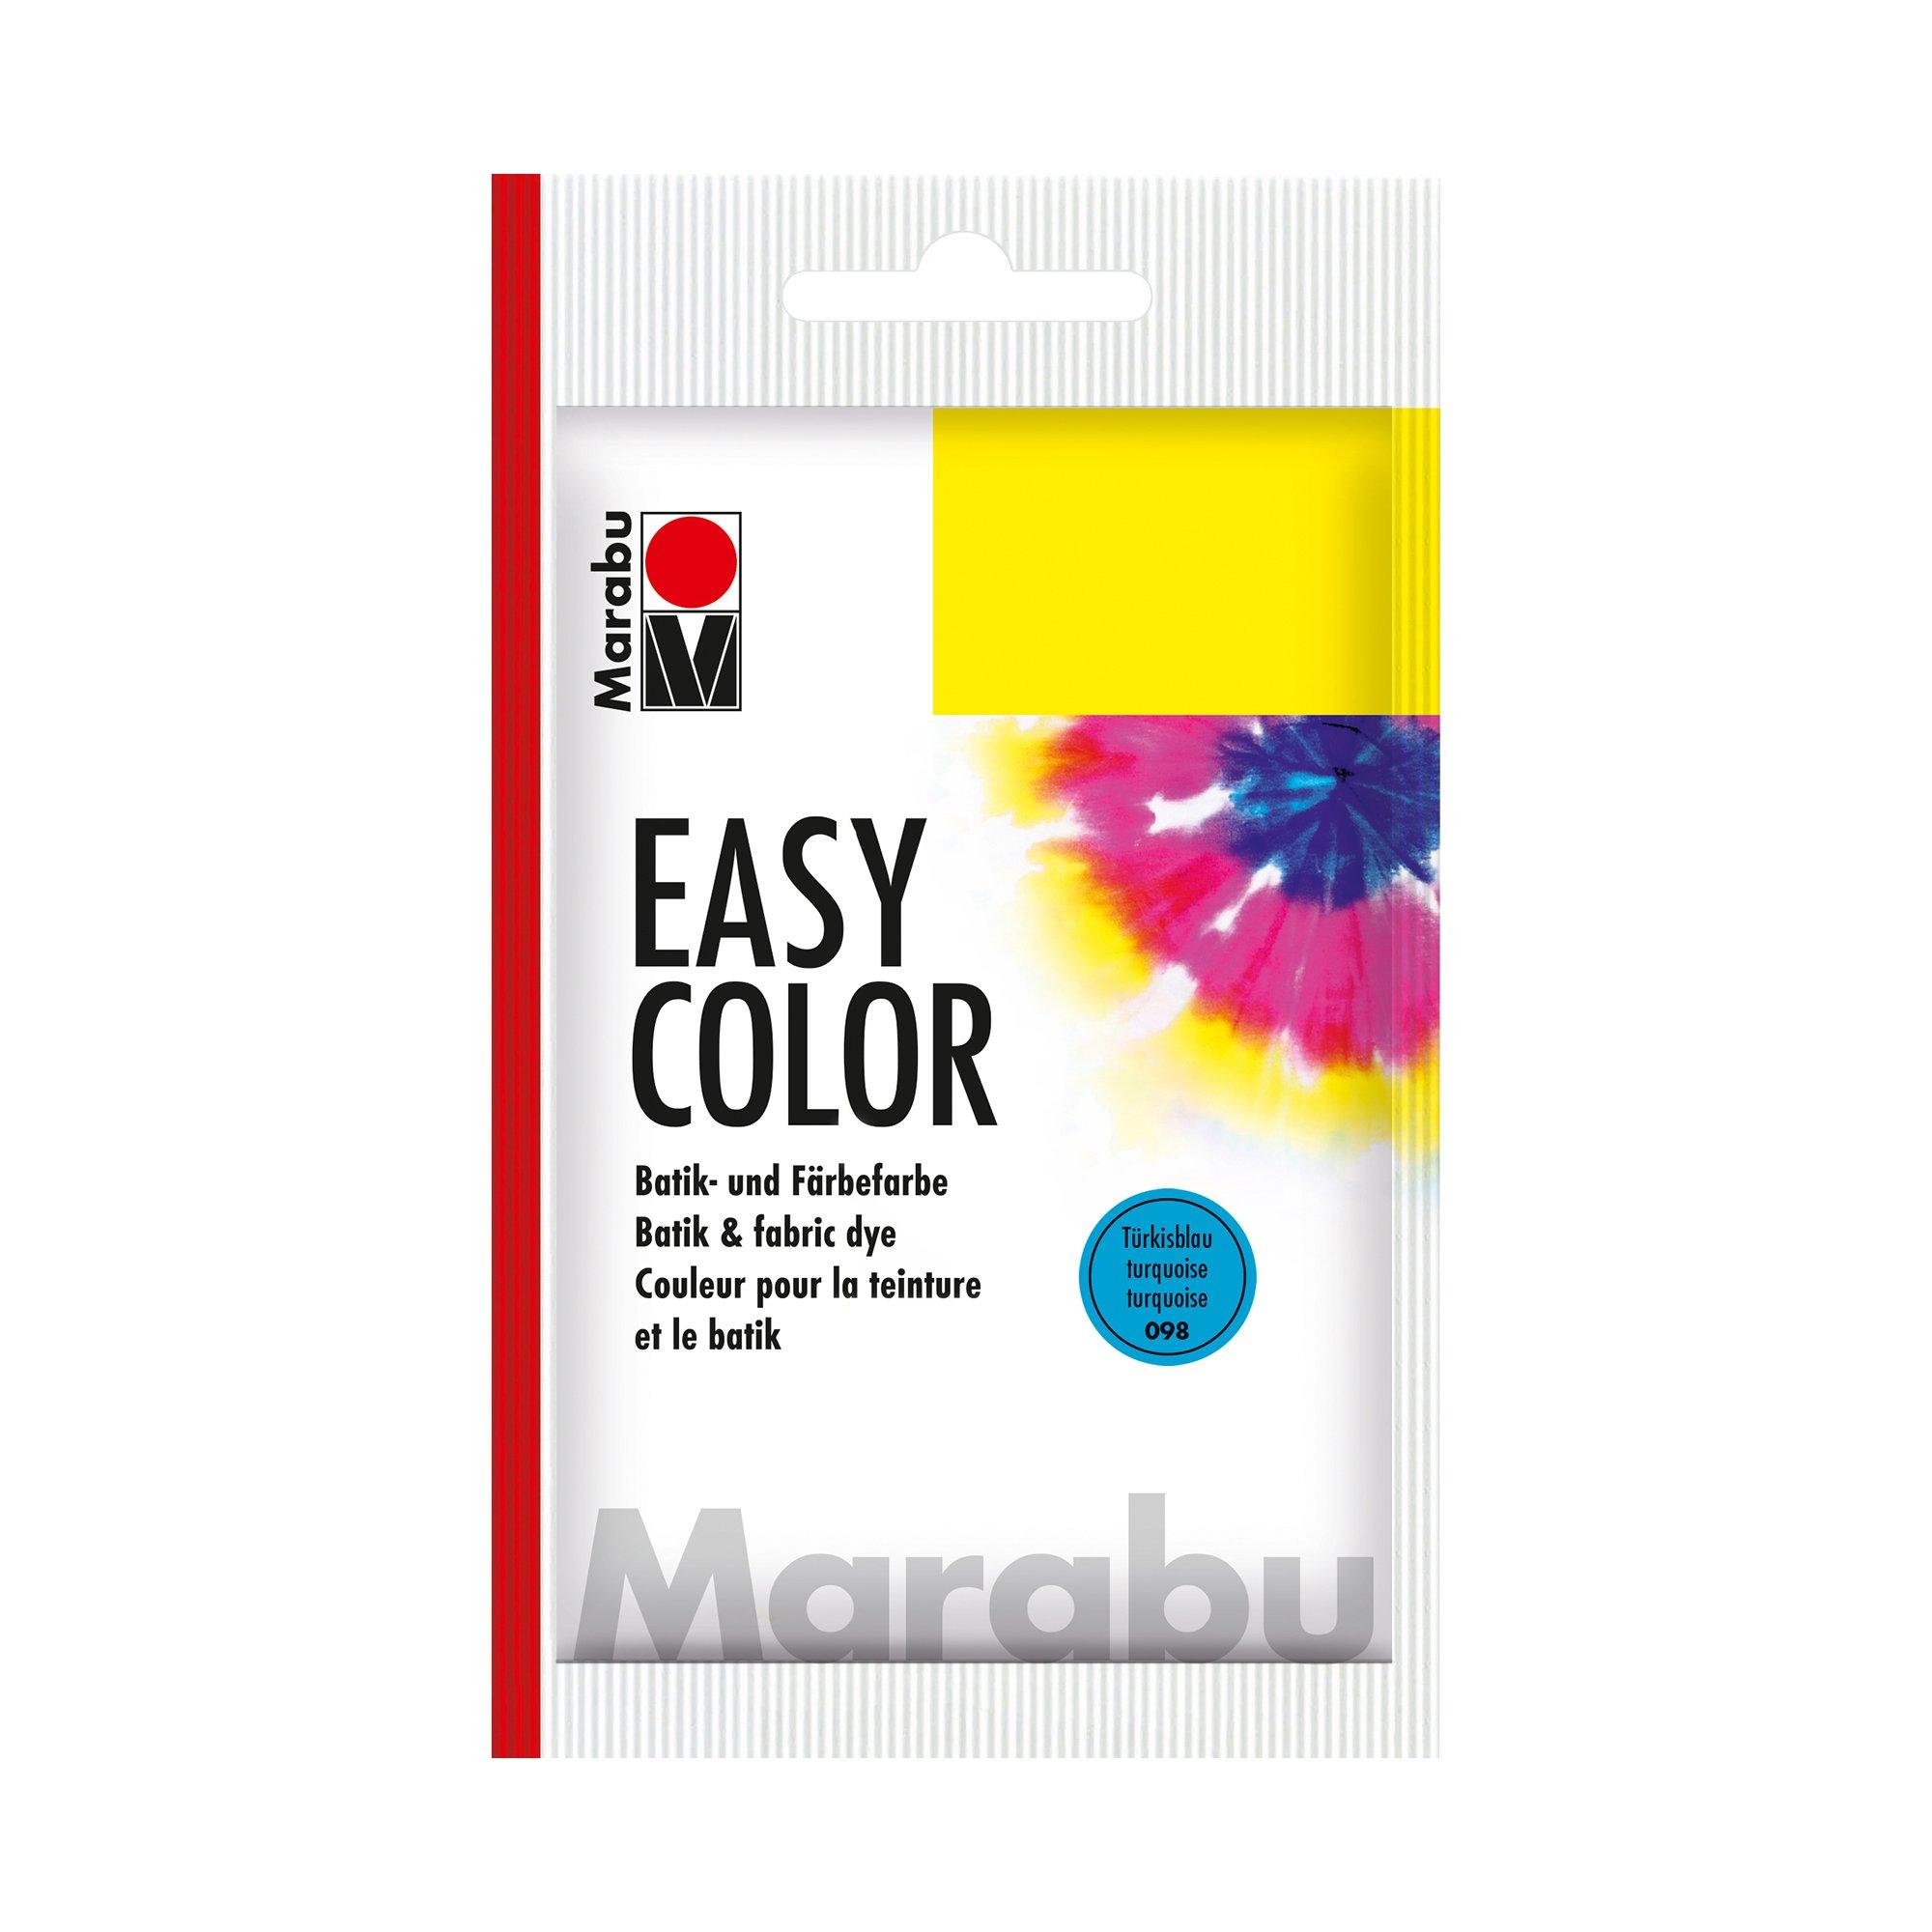 Image of Marabu Batikfarbe, Easy Color Türkisblau 098 - ONE SIZE